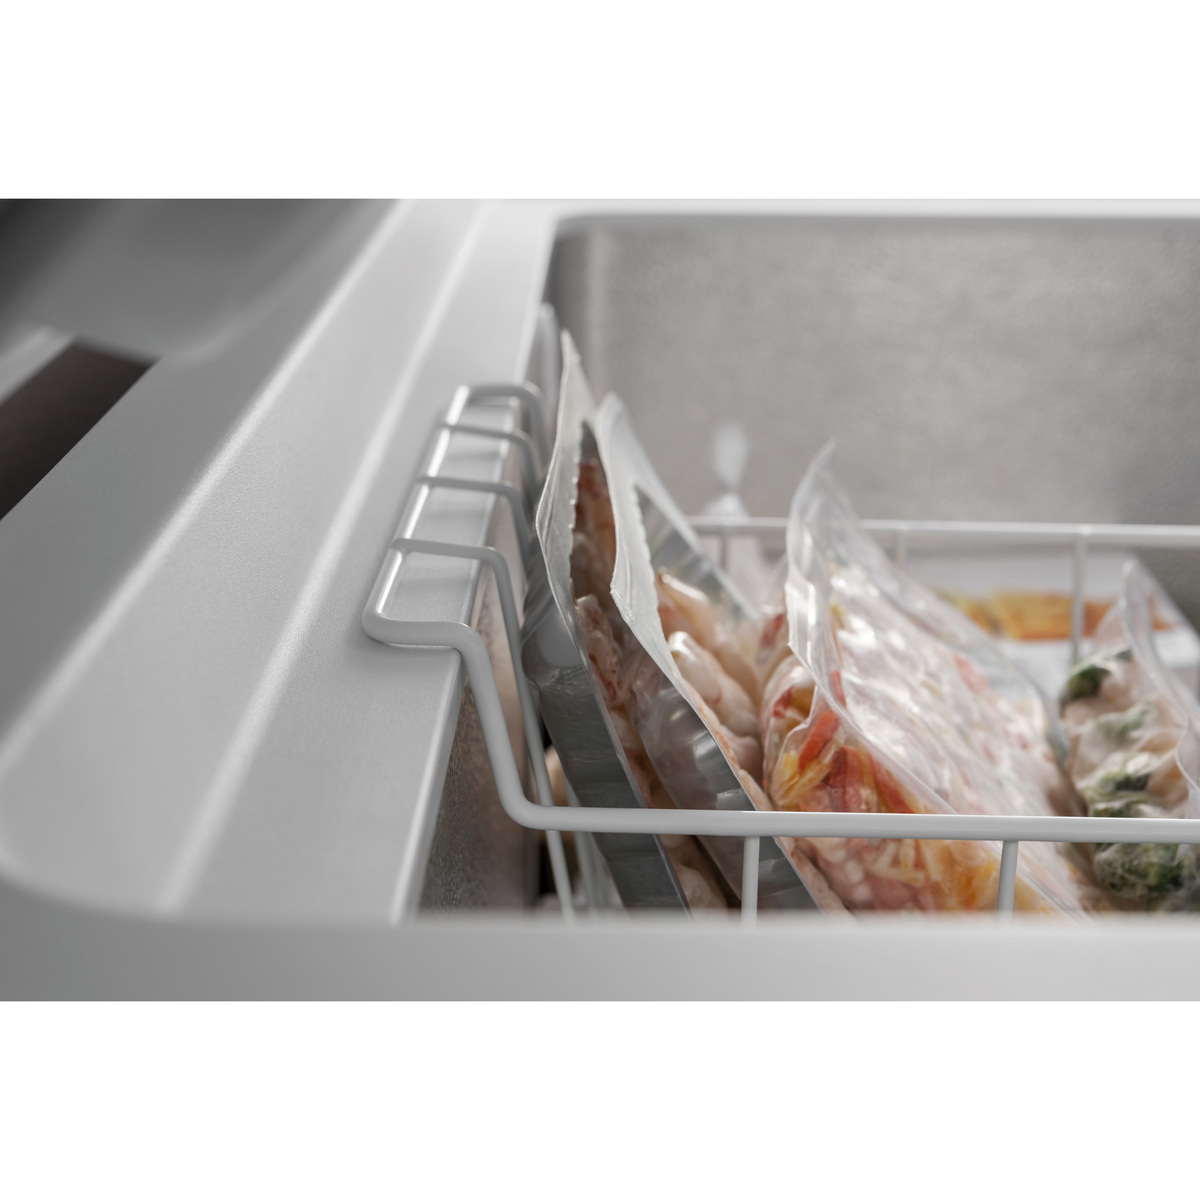 Whirlpool Chest Freezer, 315 L, White, CF420T